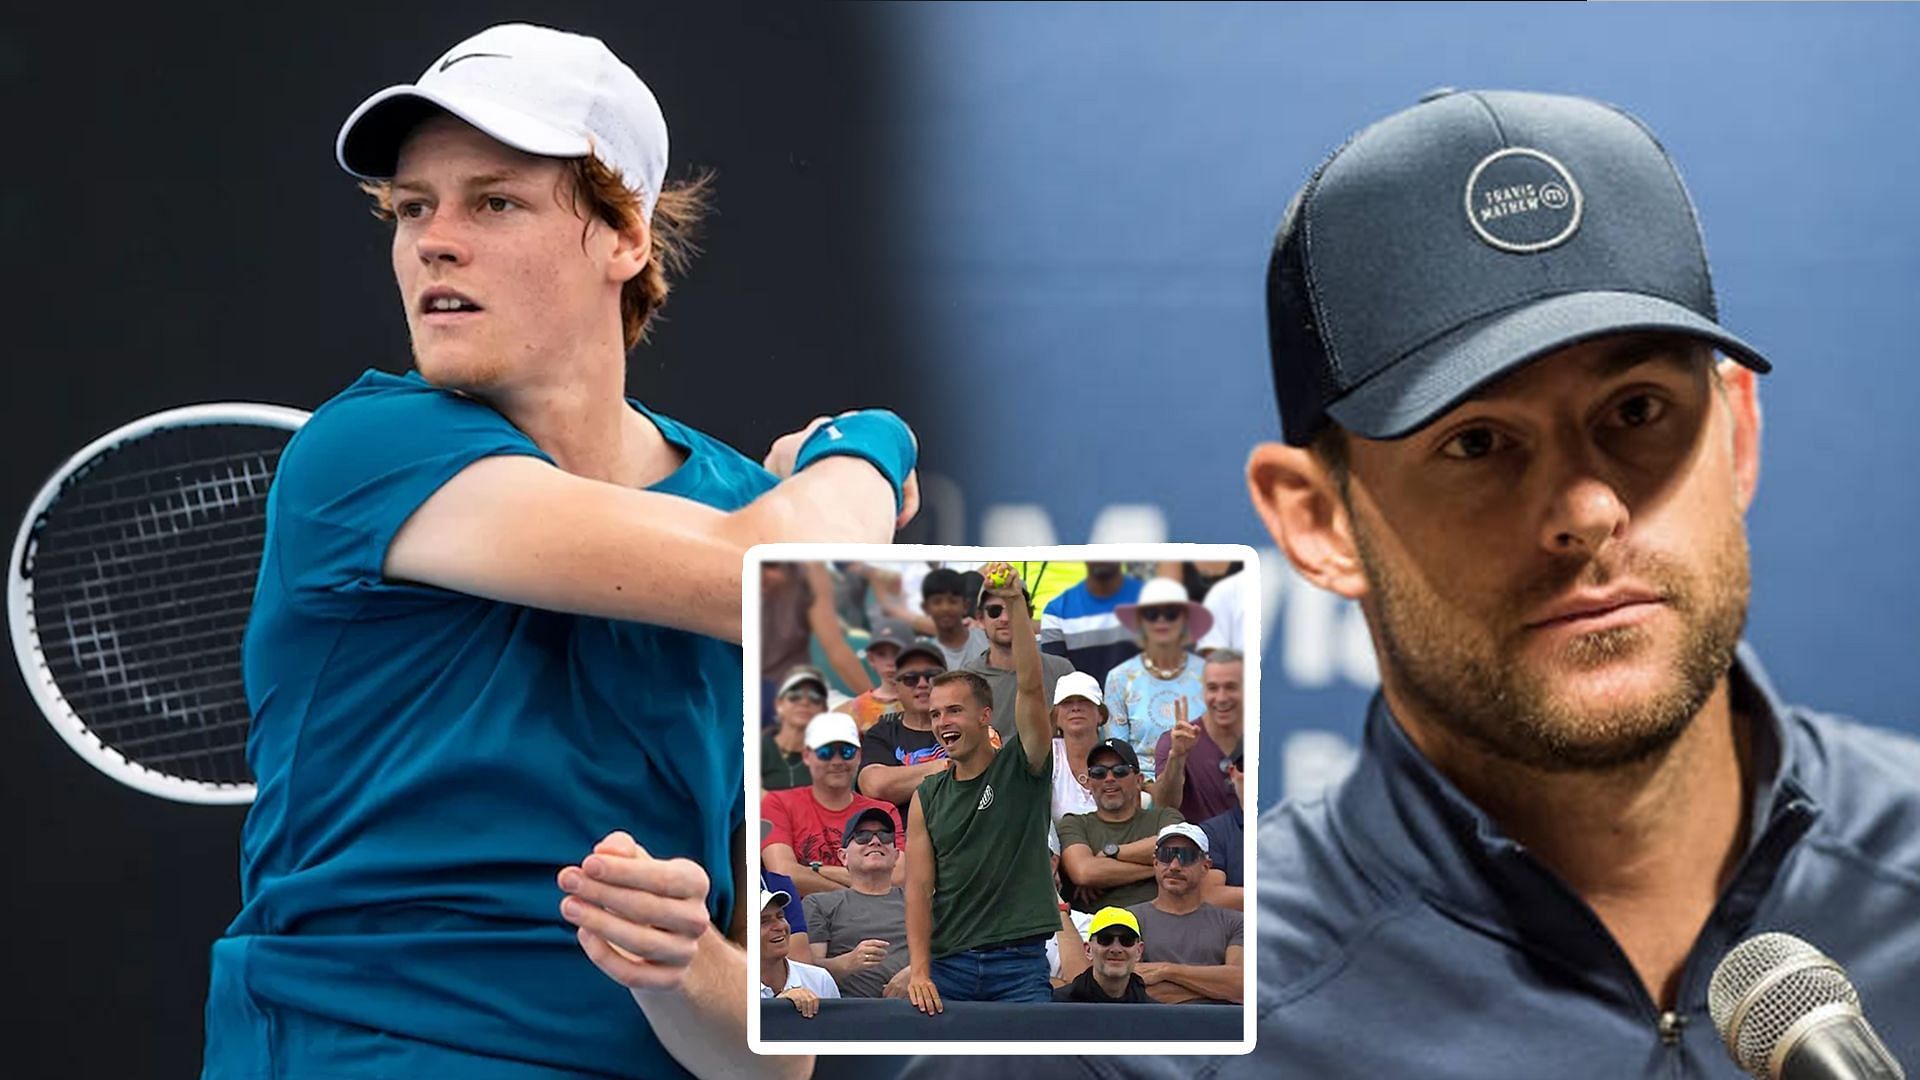 Andy Roddick bemoans fan being asked to return tennis ball after catching it during Jannik Sinner